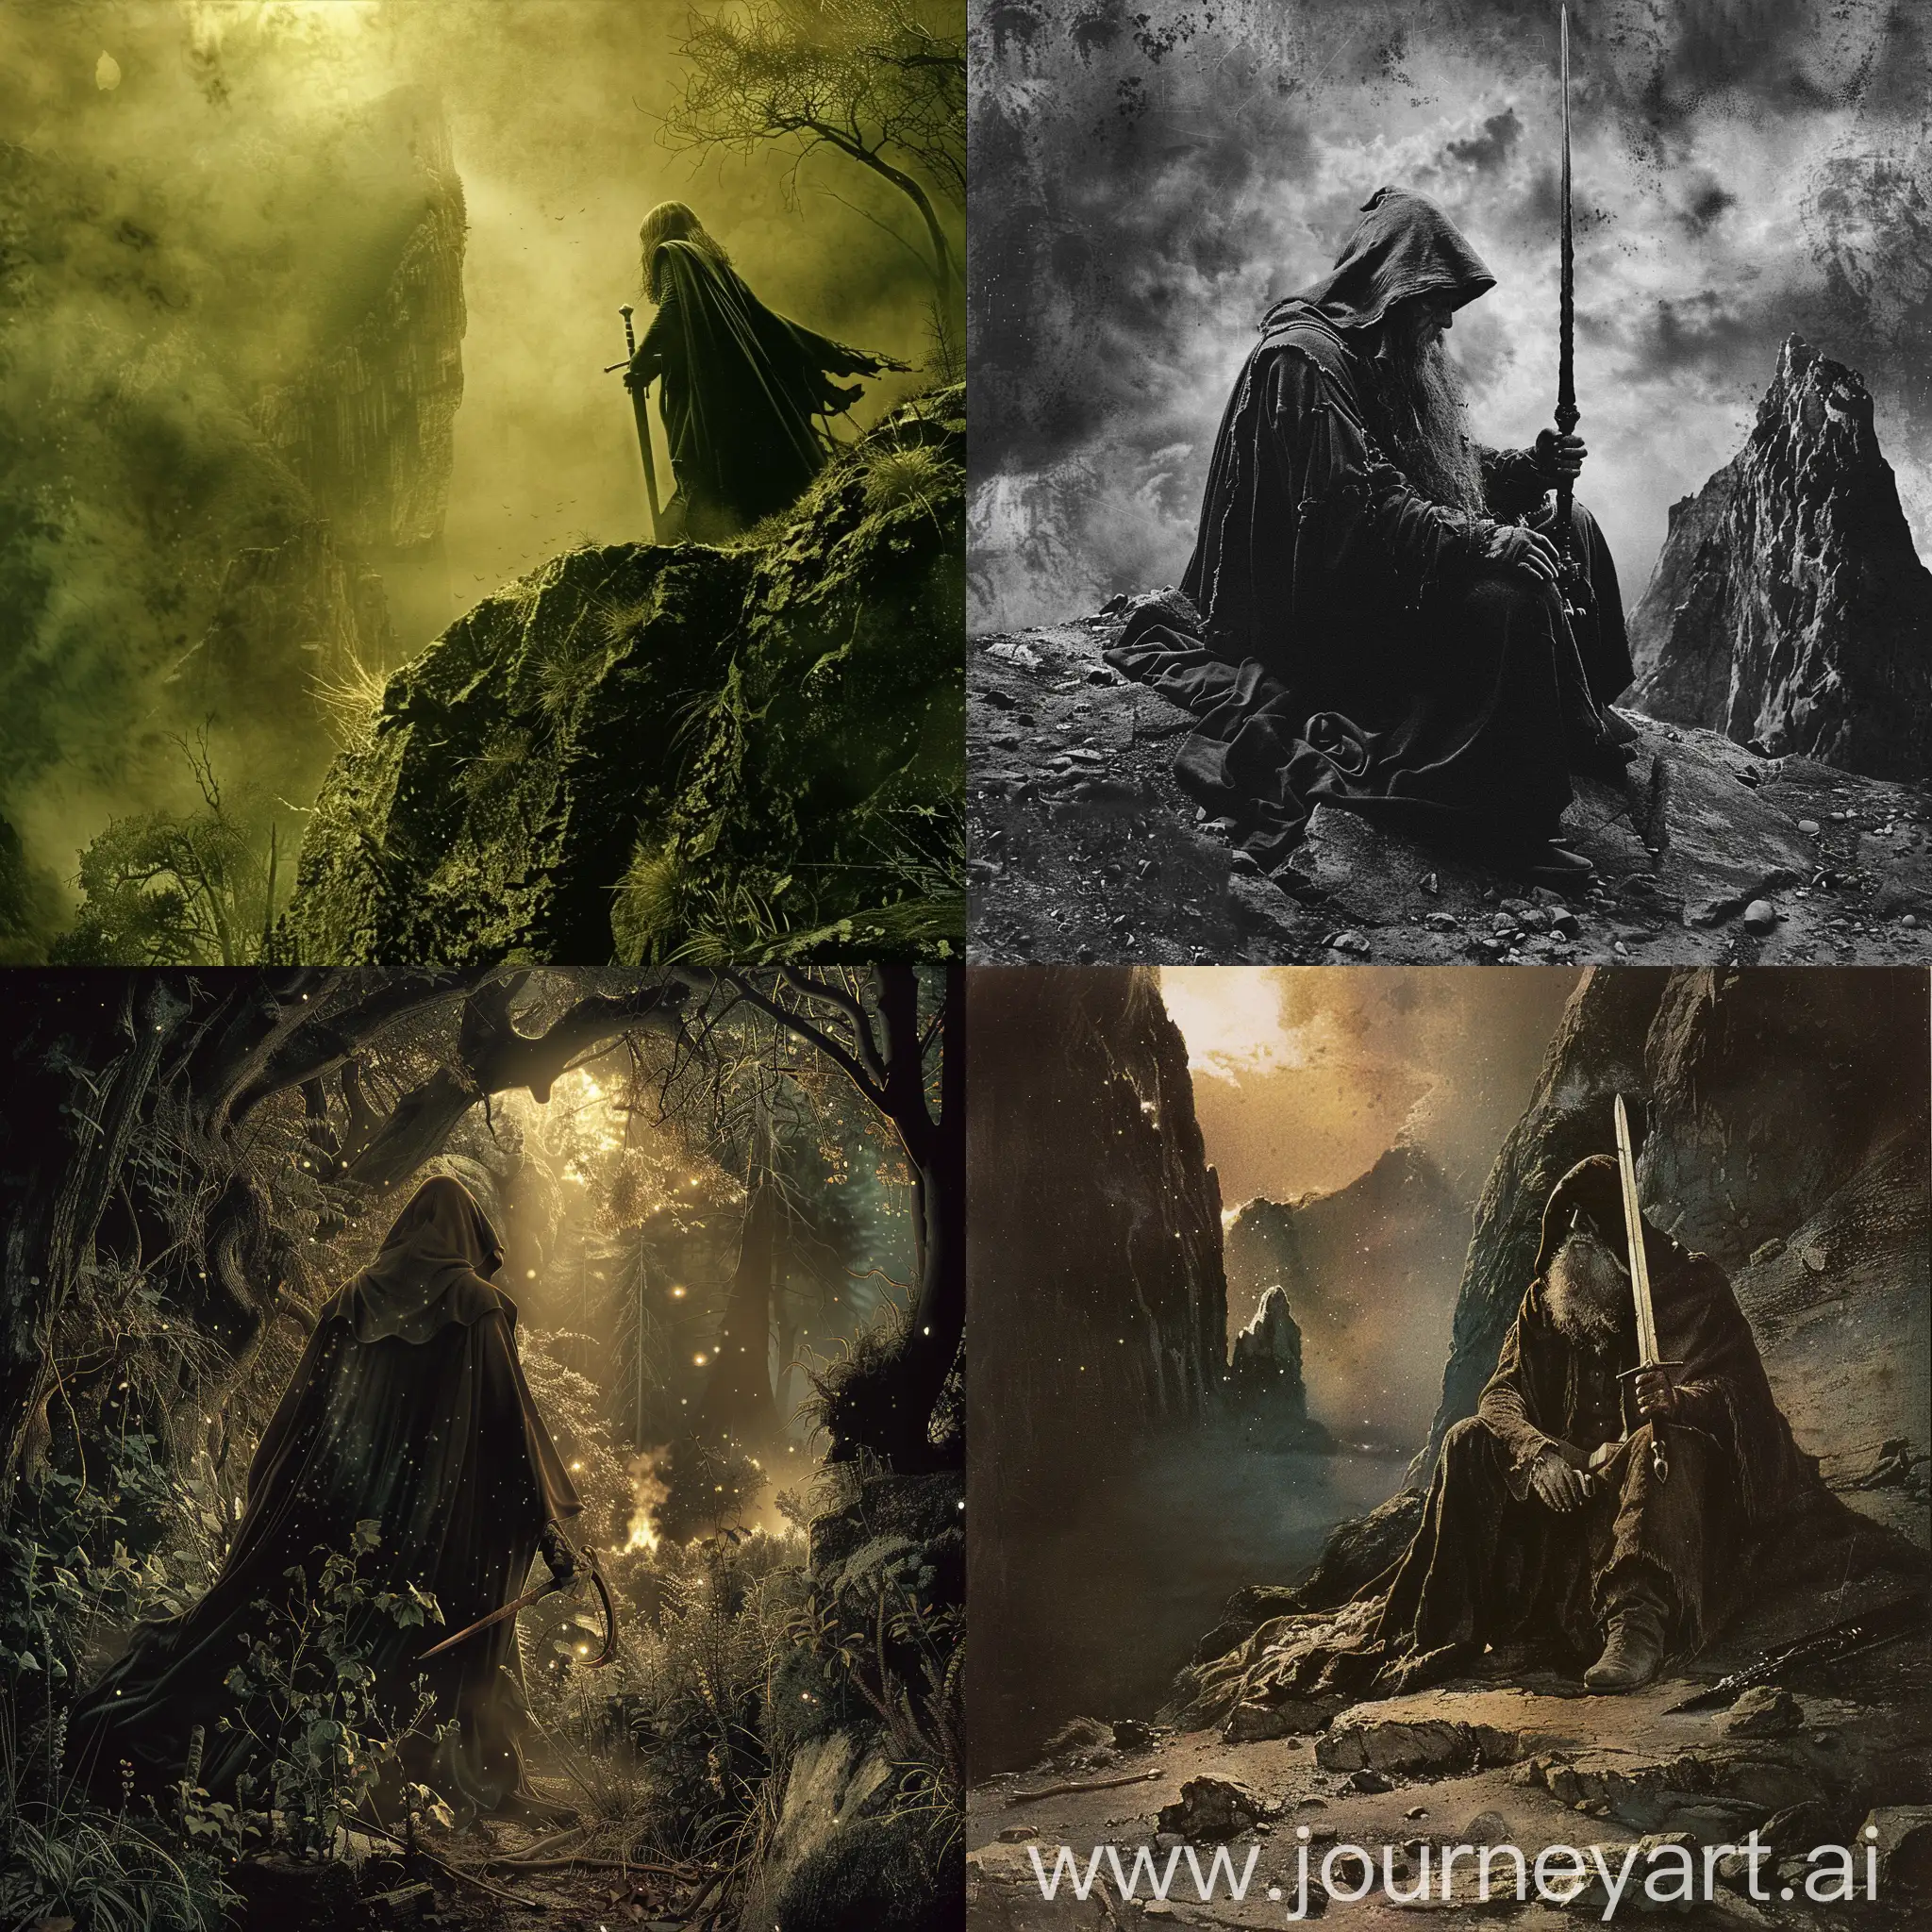 Dark-Fantasy-Scene-Inspired-by-Lord-of-the-Rings-in-the-1970s